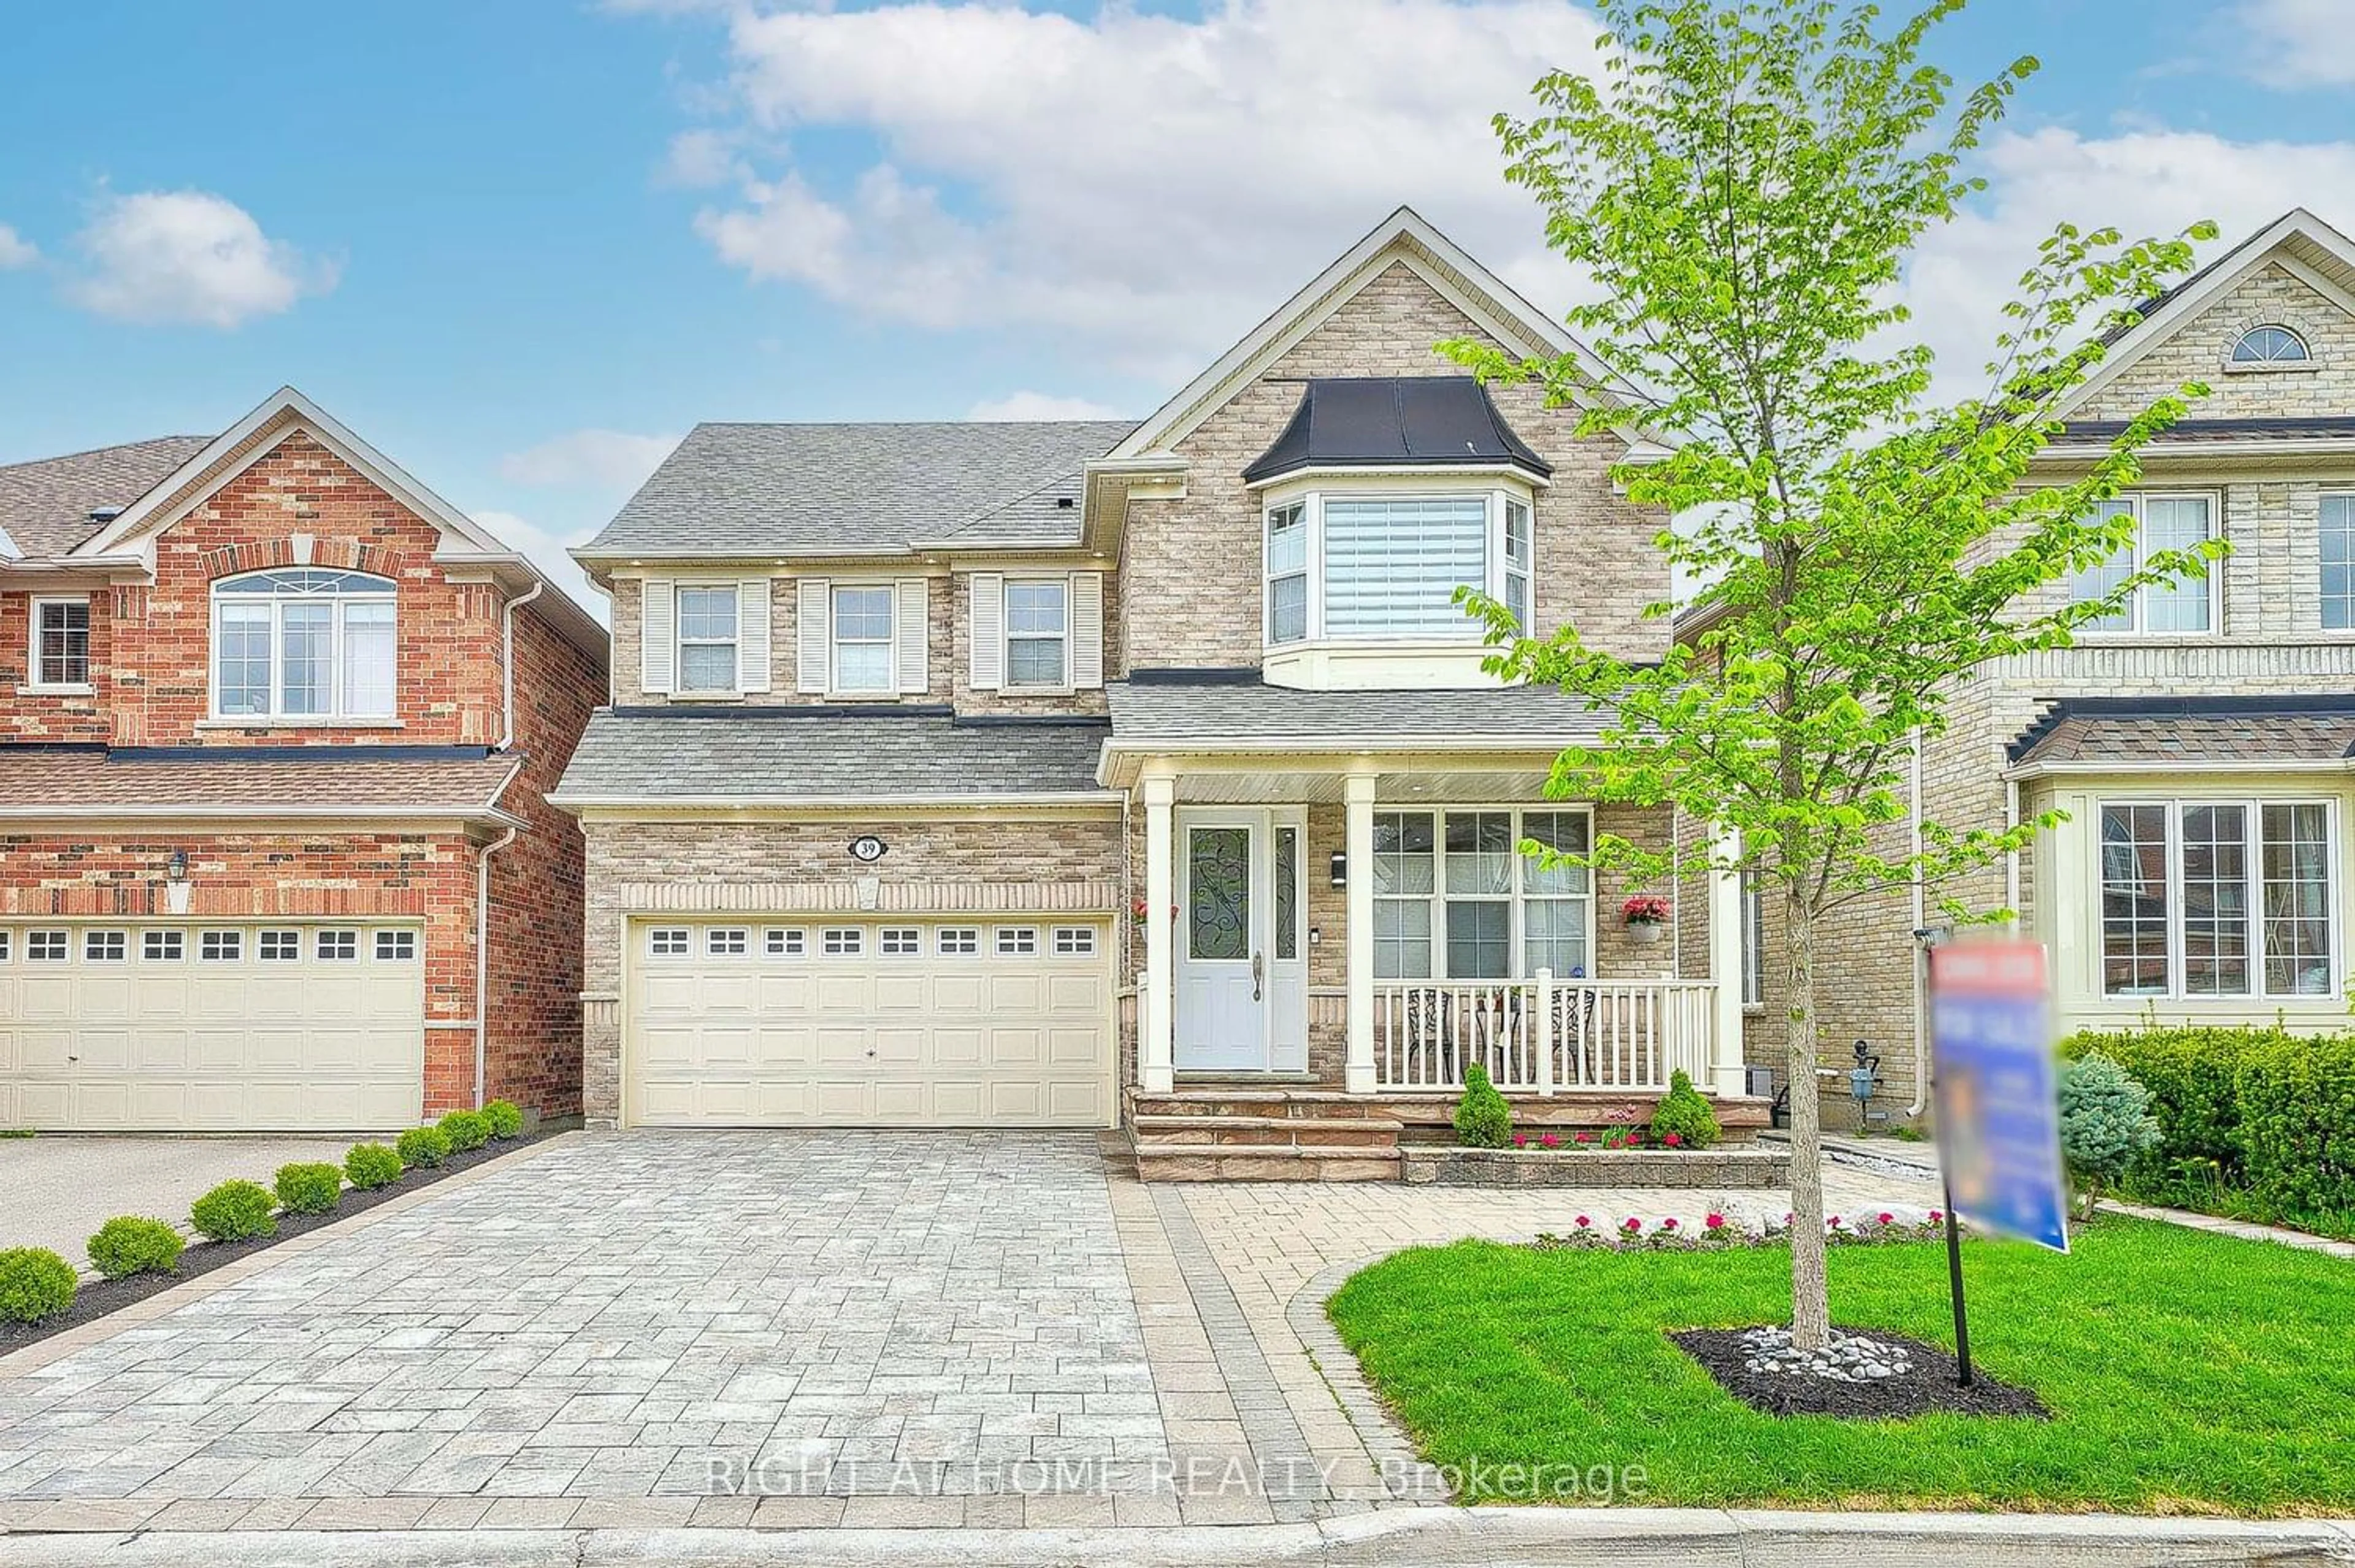 Home with brick exterior material for 39 Verdi Rd, Richmond Hill Ontario L4E 4P9